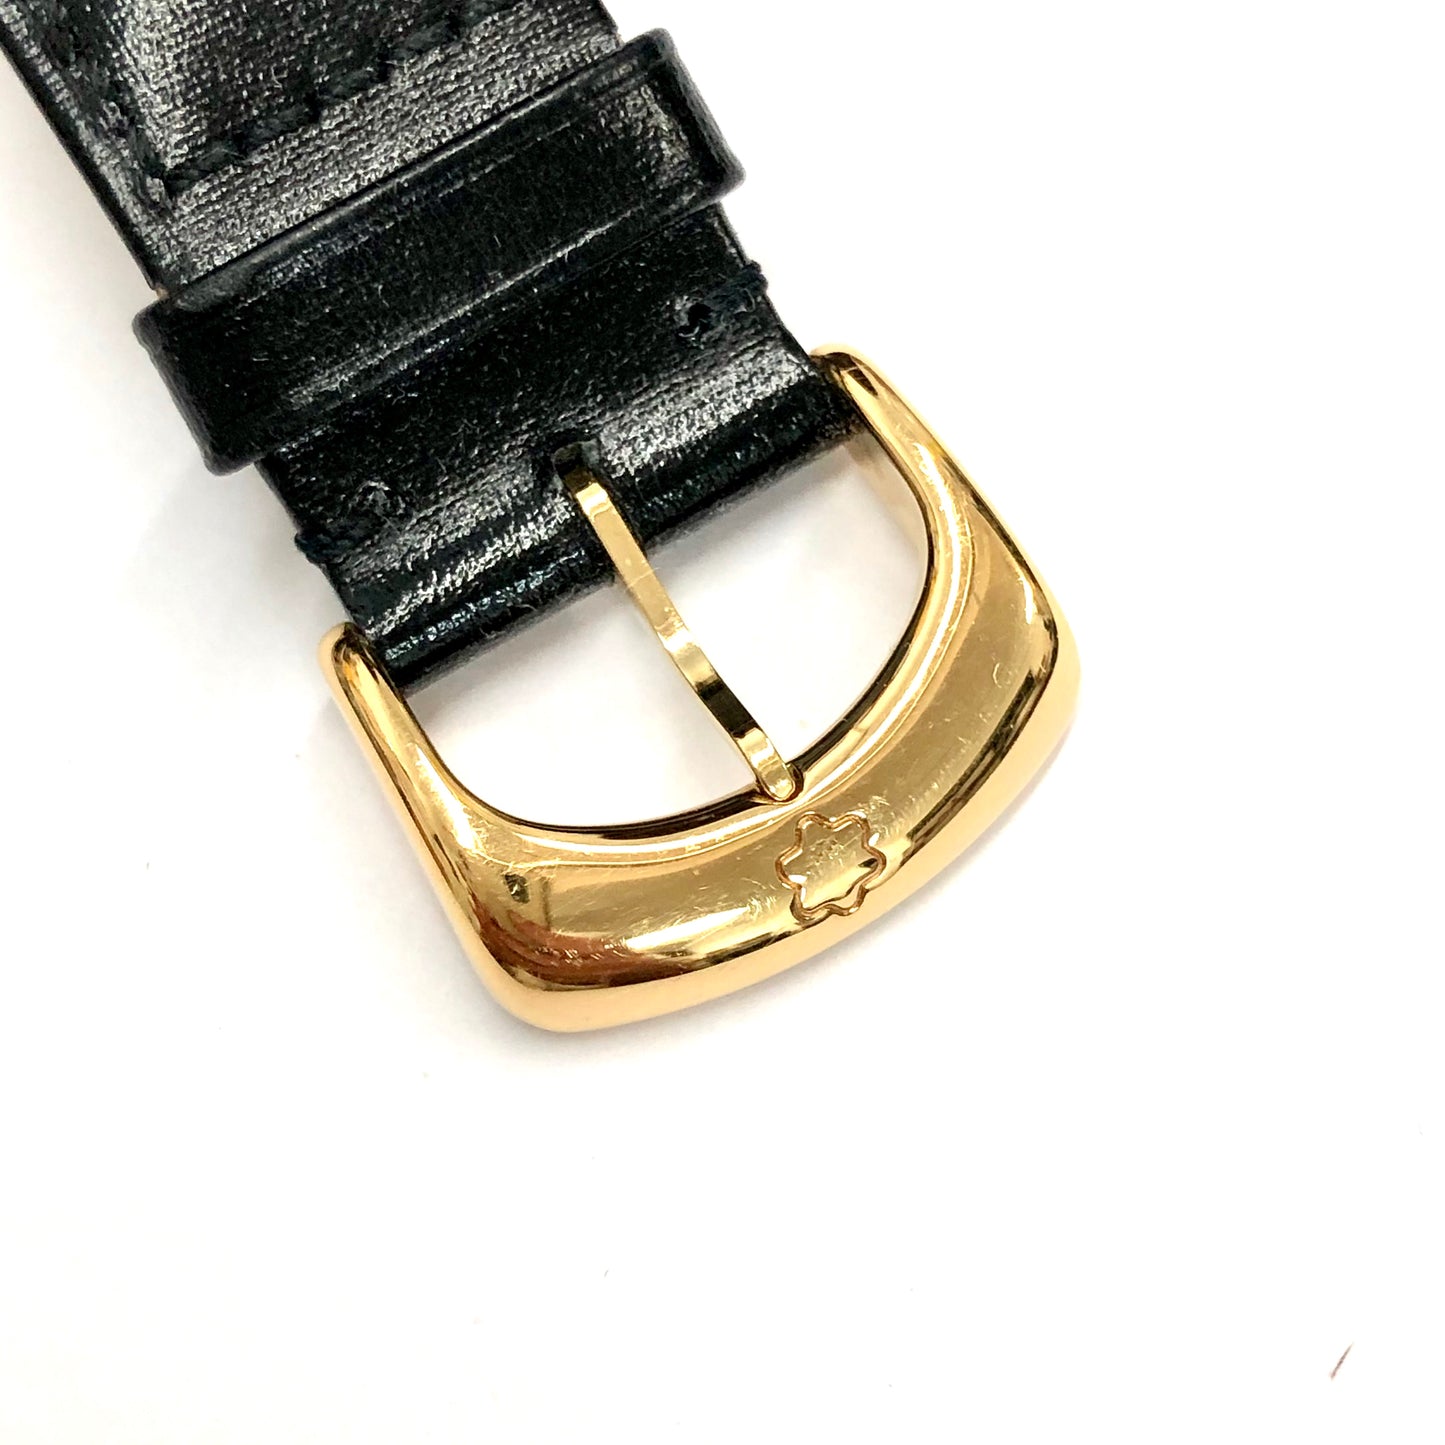 MONTBLANC MEISTERSTUCK Chronograph Quartz 32mm Goldelectroplated Diamond Watch